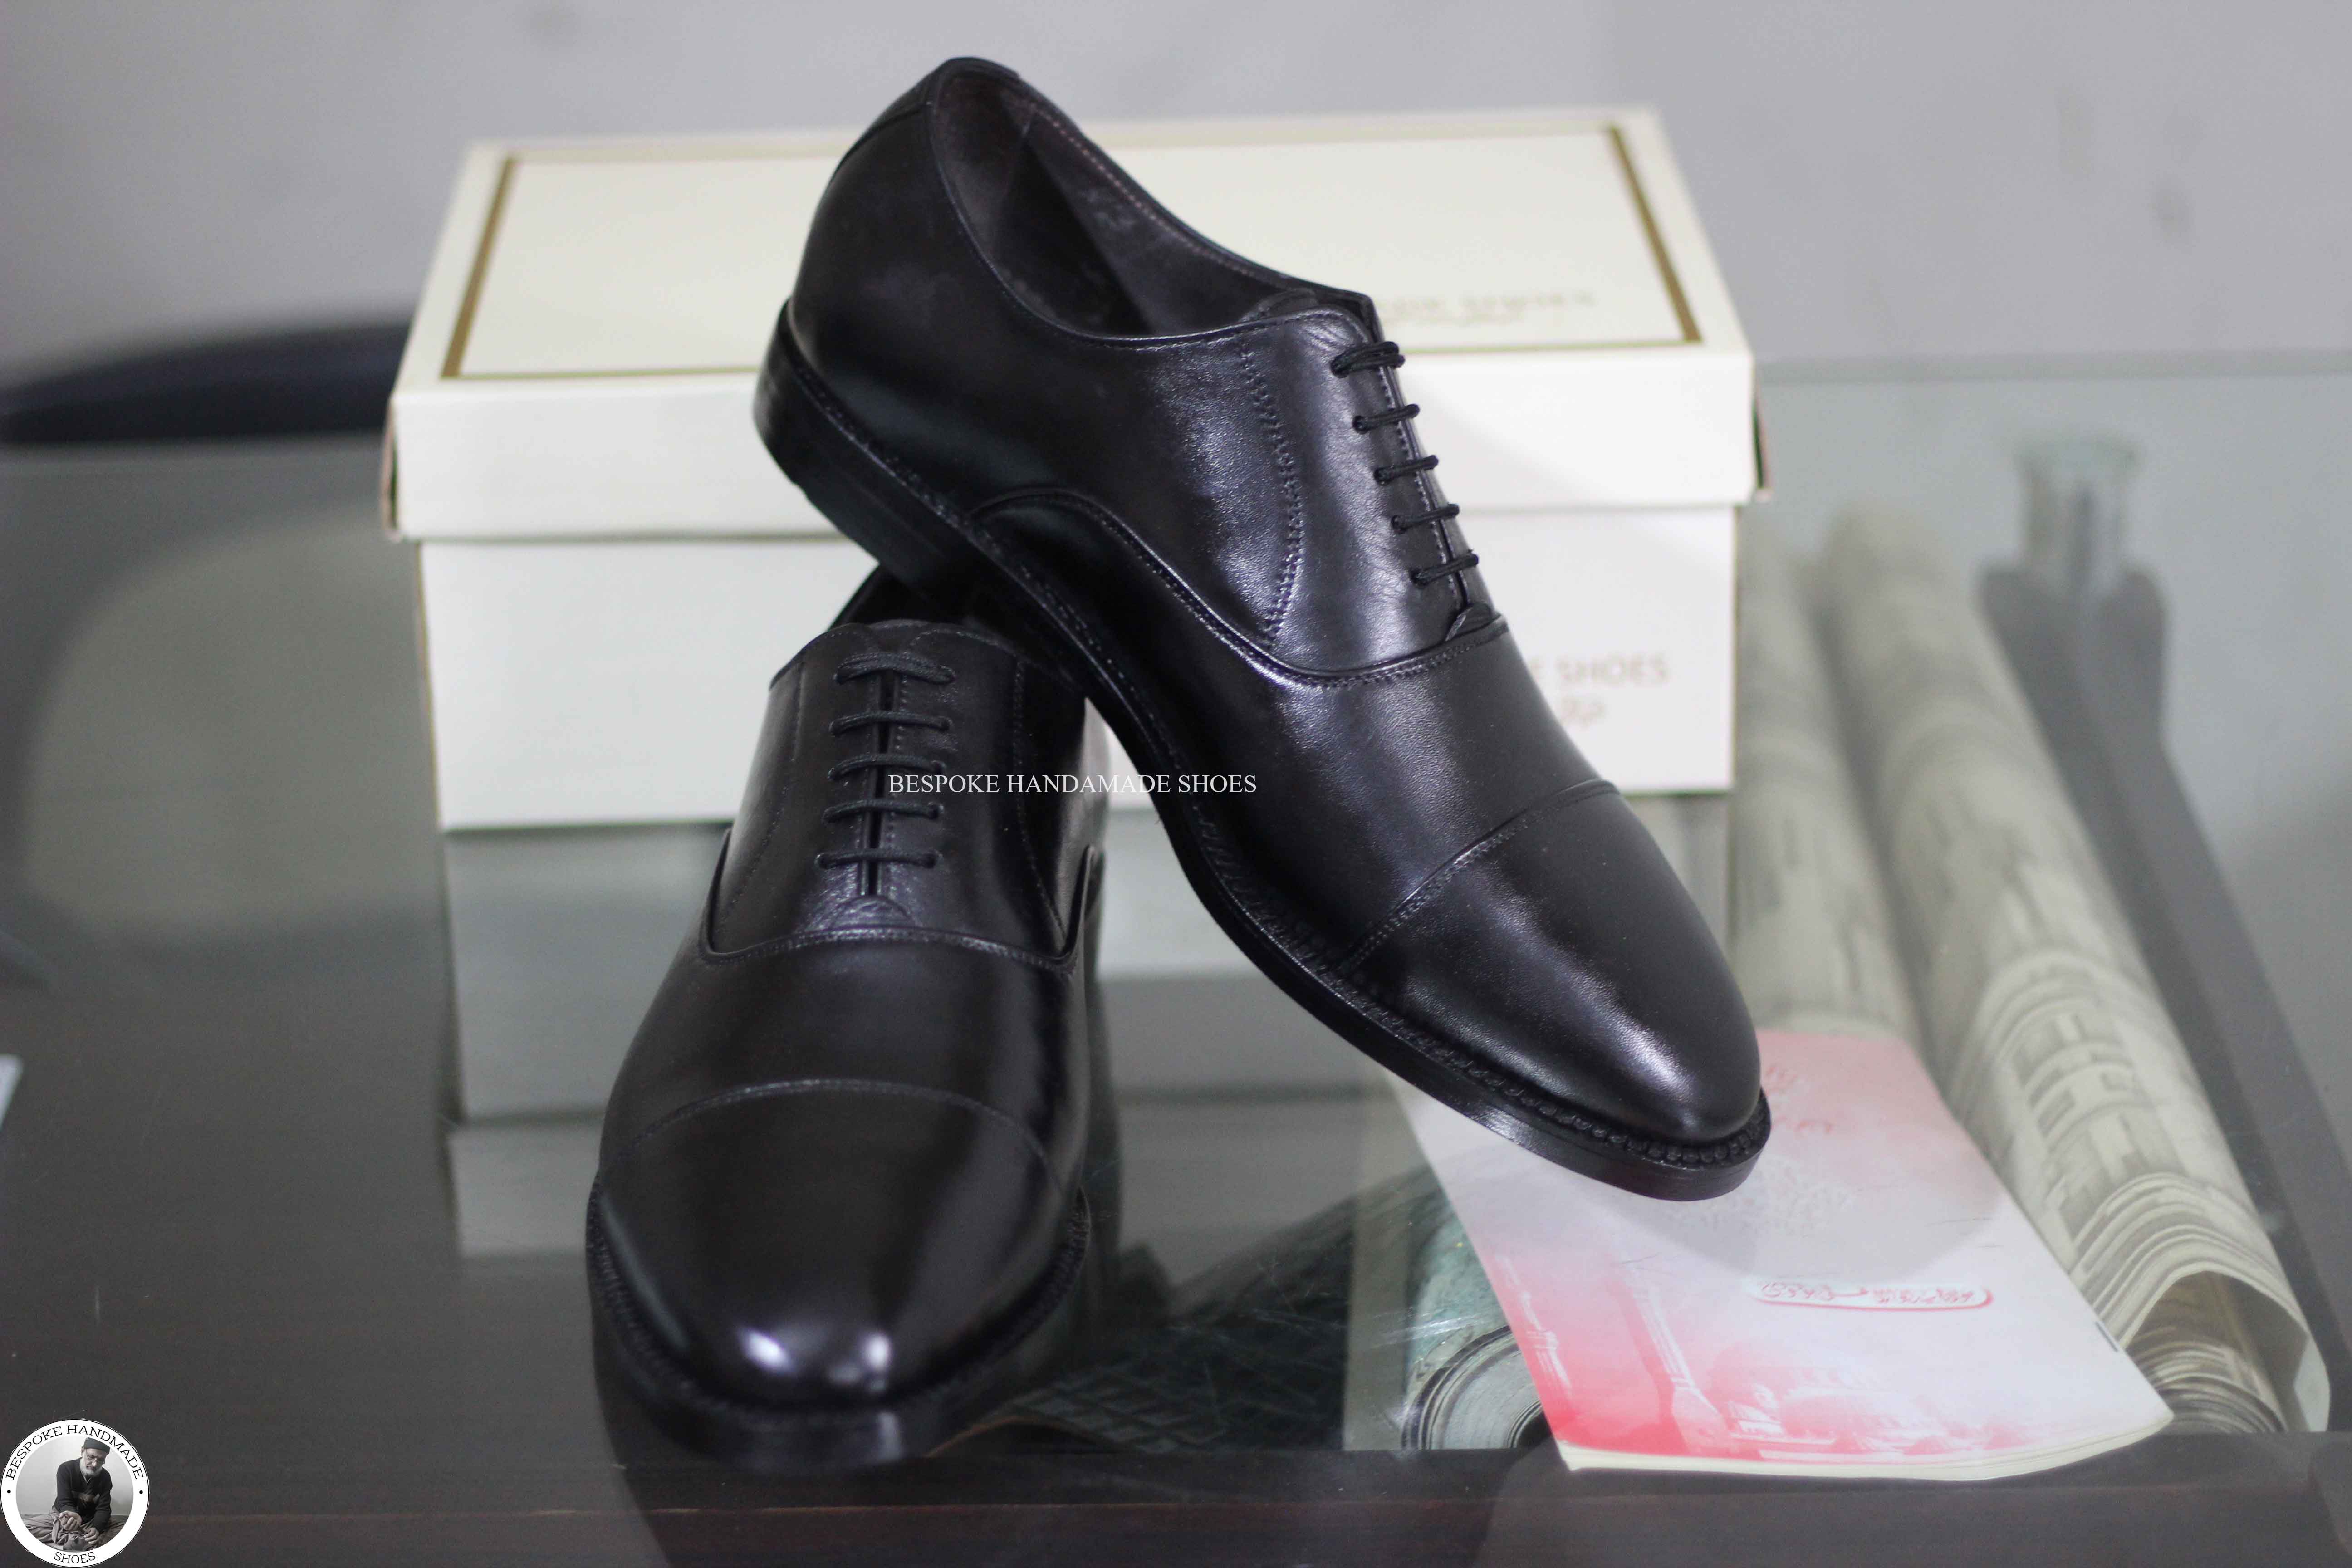 New Men's Handmade Black Leather Oxford Toe Cap Dress Shoes For Men'